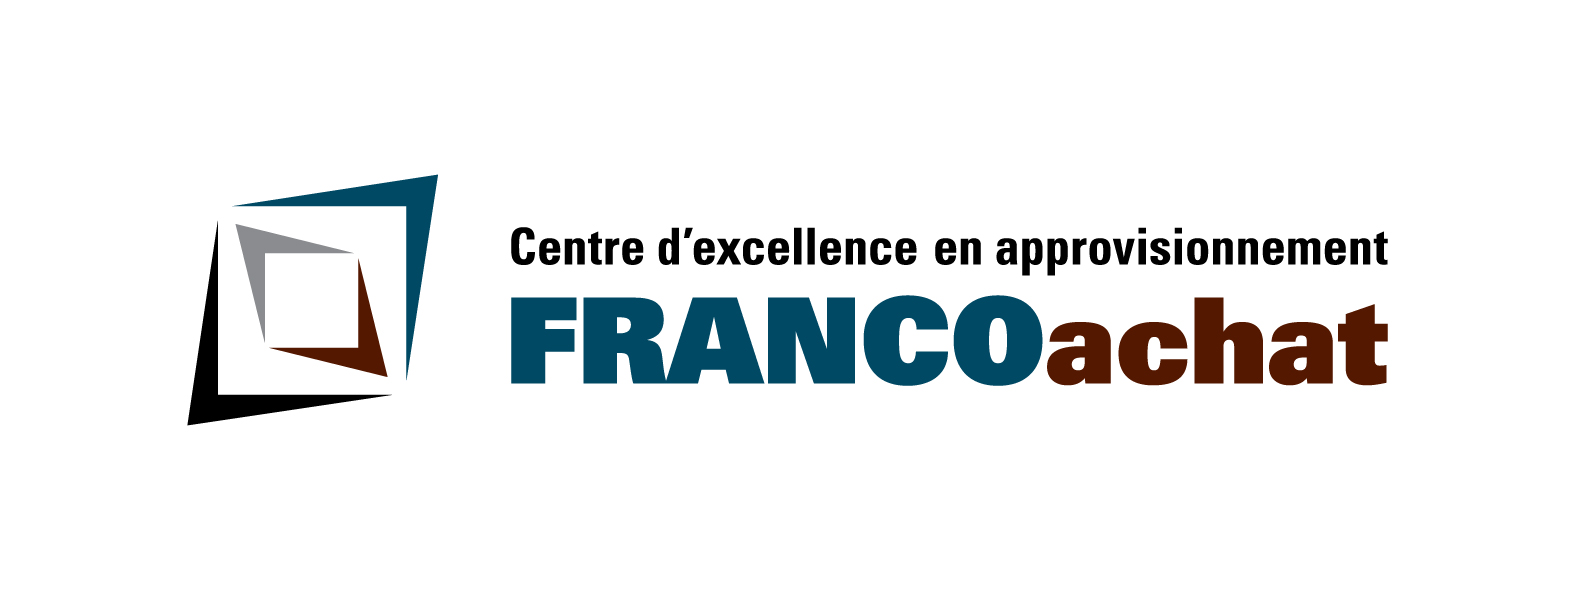 CEA FRANCOachat_logo